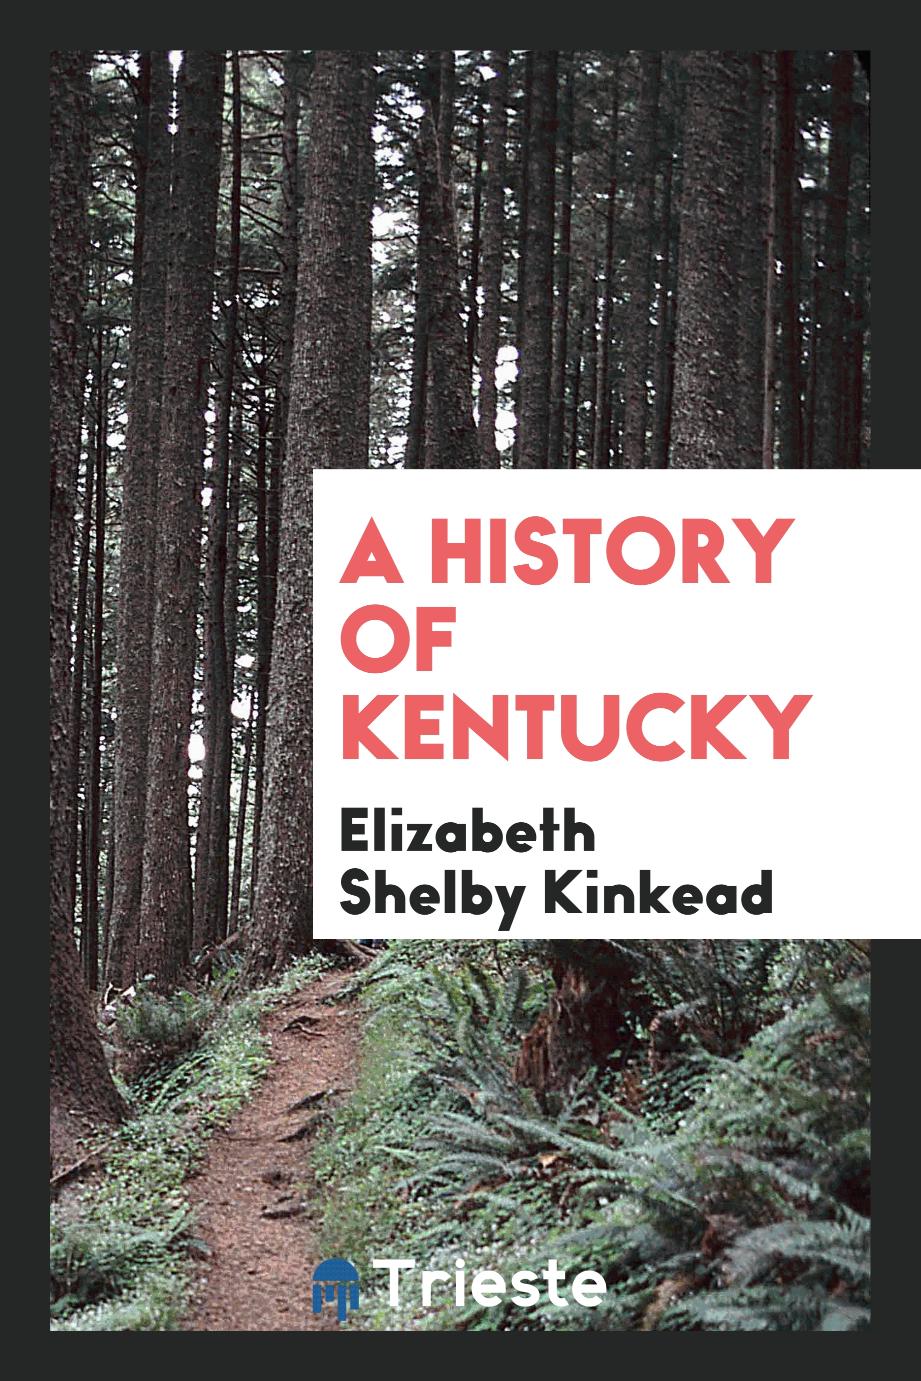 A history of Kentucky